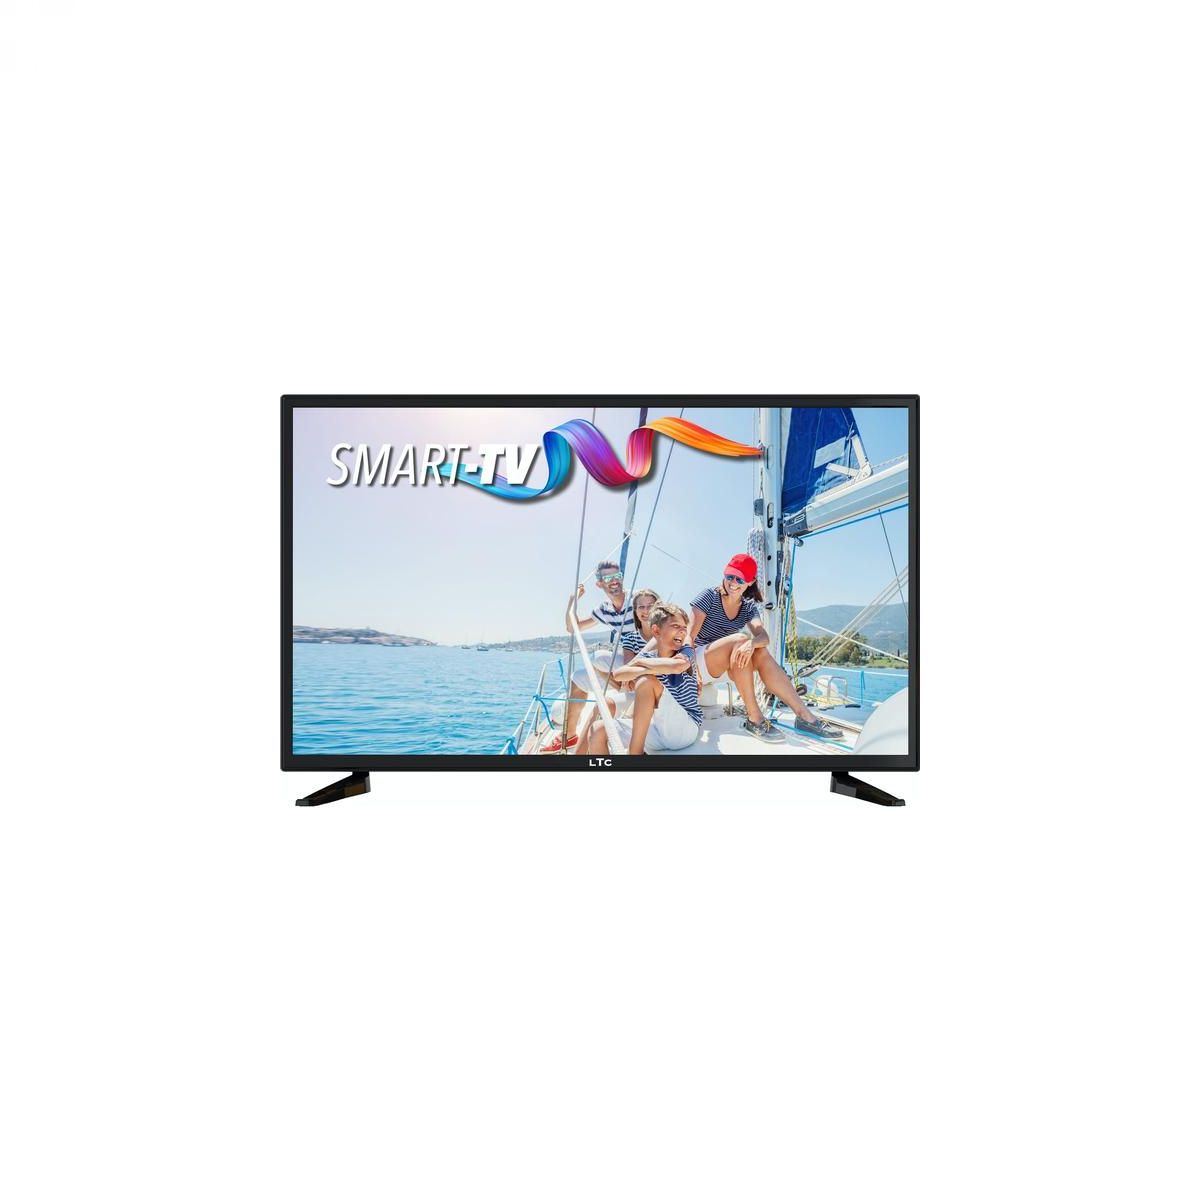 LTC 2409 Smart LED TV 12V 24” Full HD Android